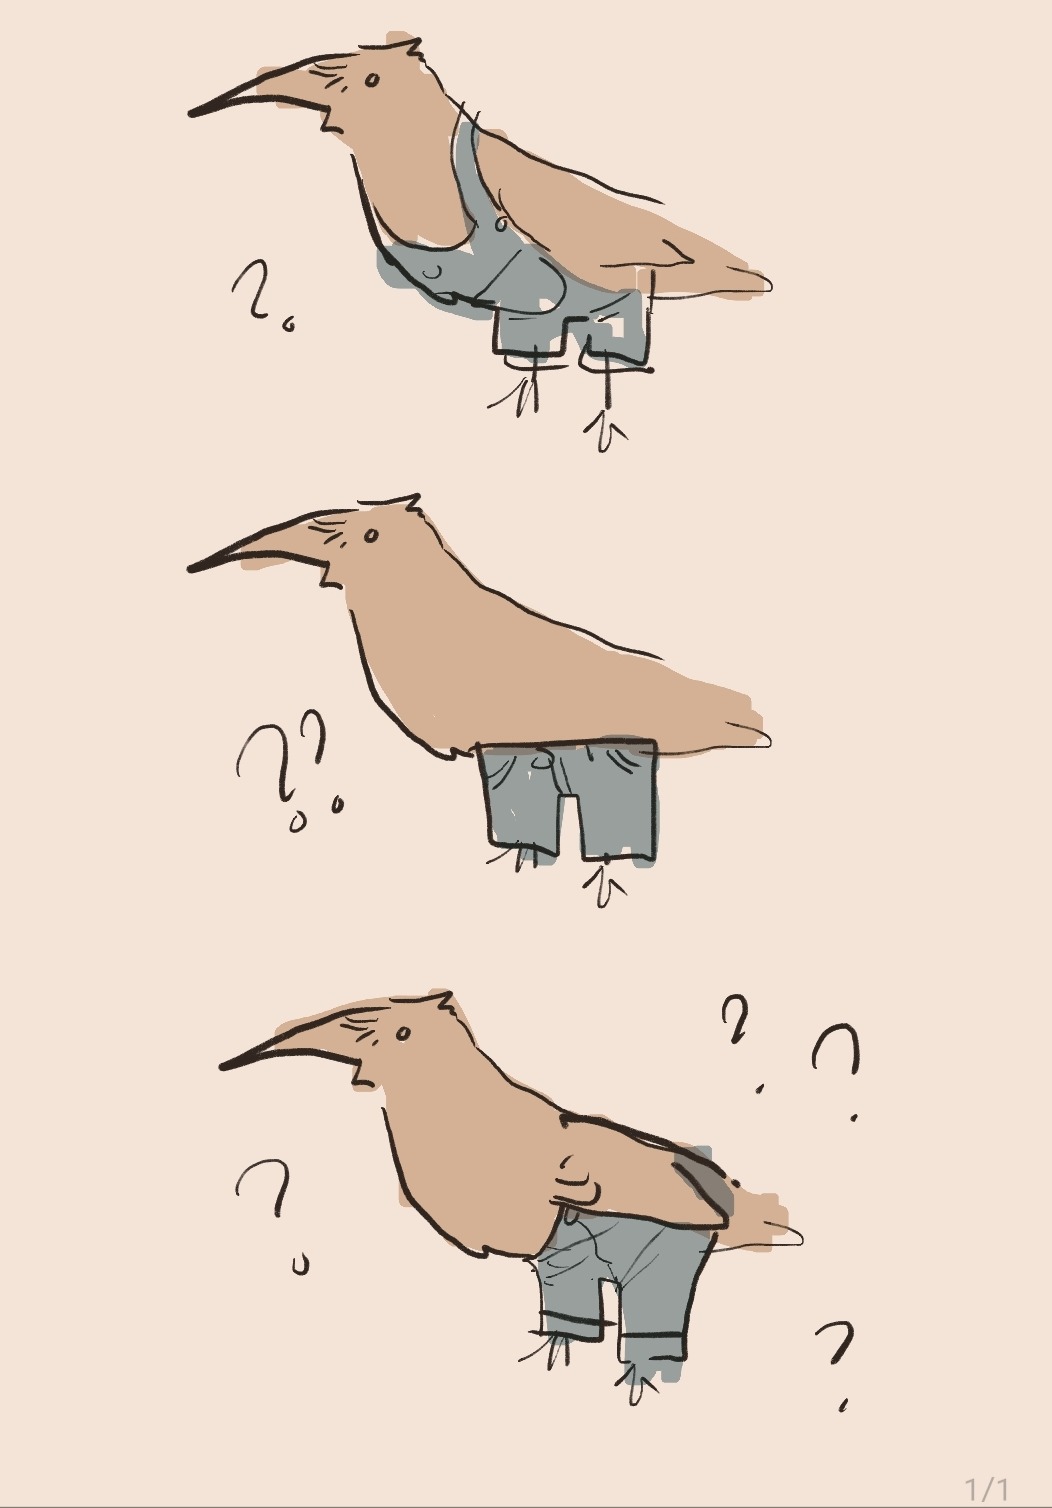 Protection Crow on Tumblr